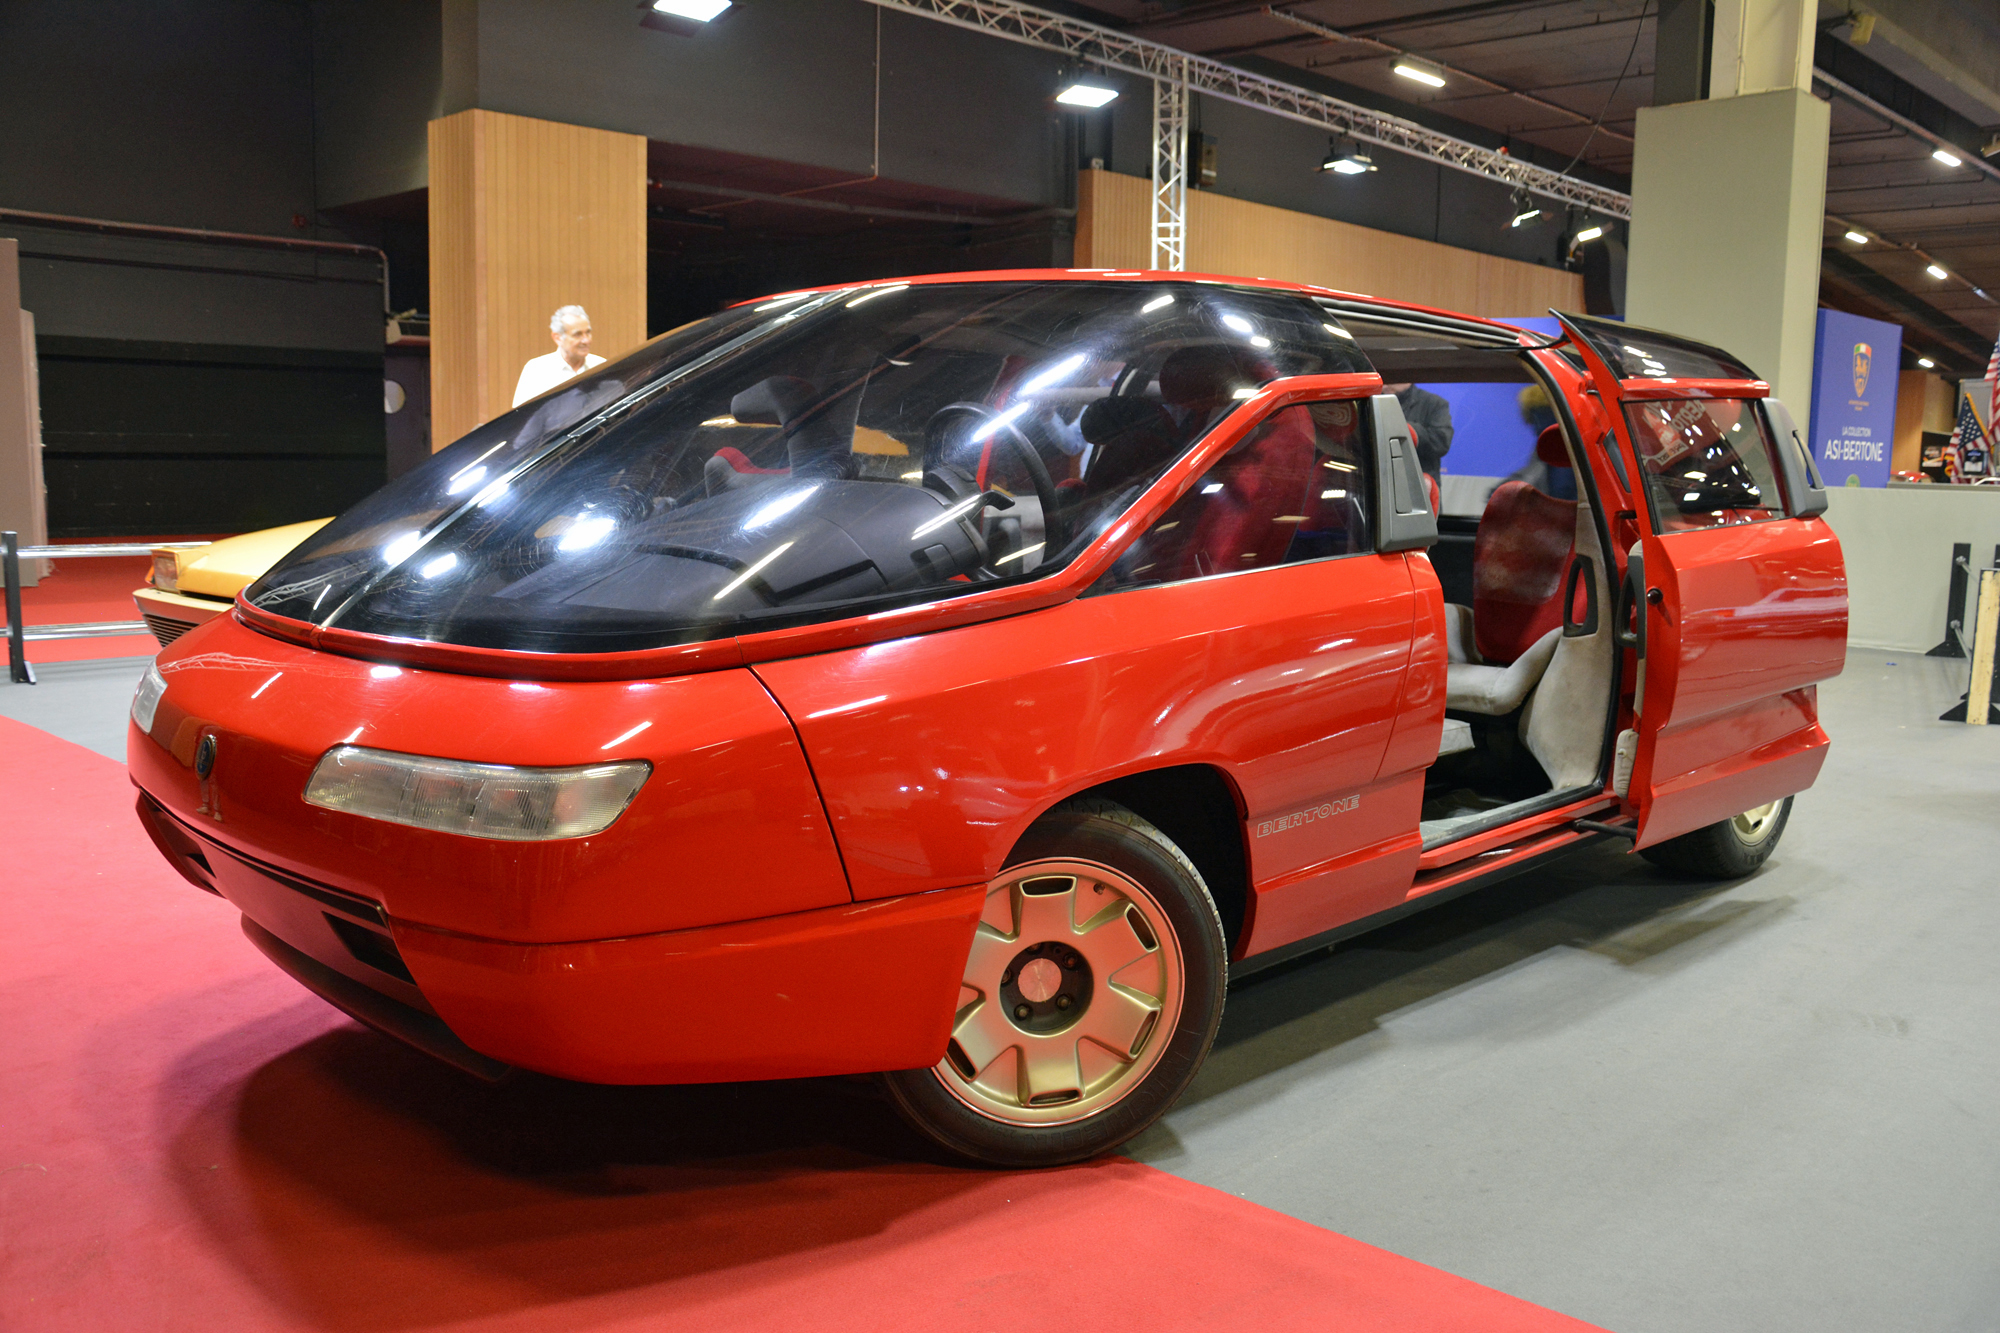 Bertone built a sporty, futuristic minivan powered by a 455-horsepower Lamb...